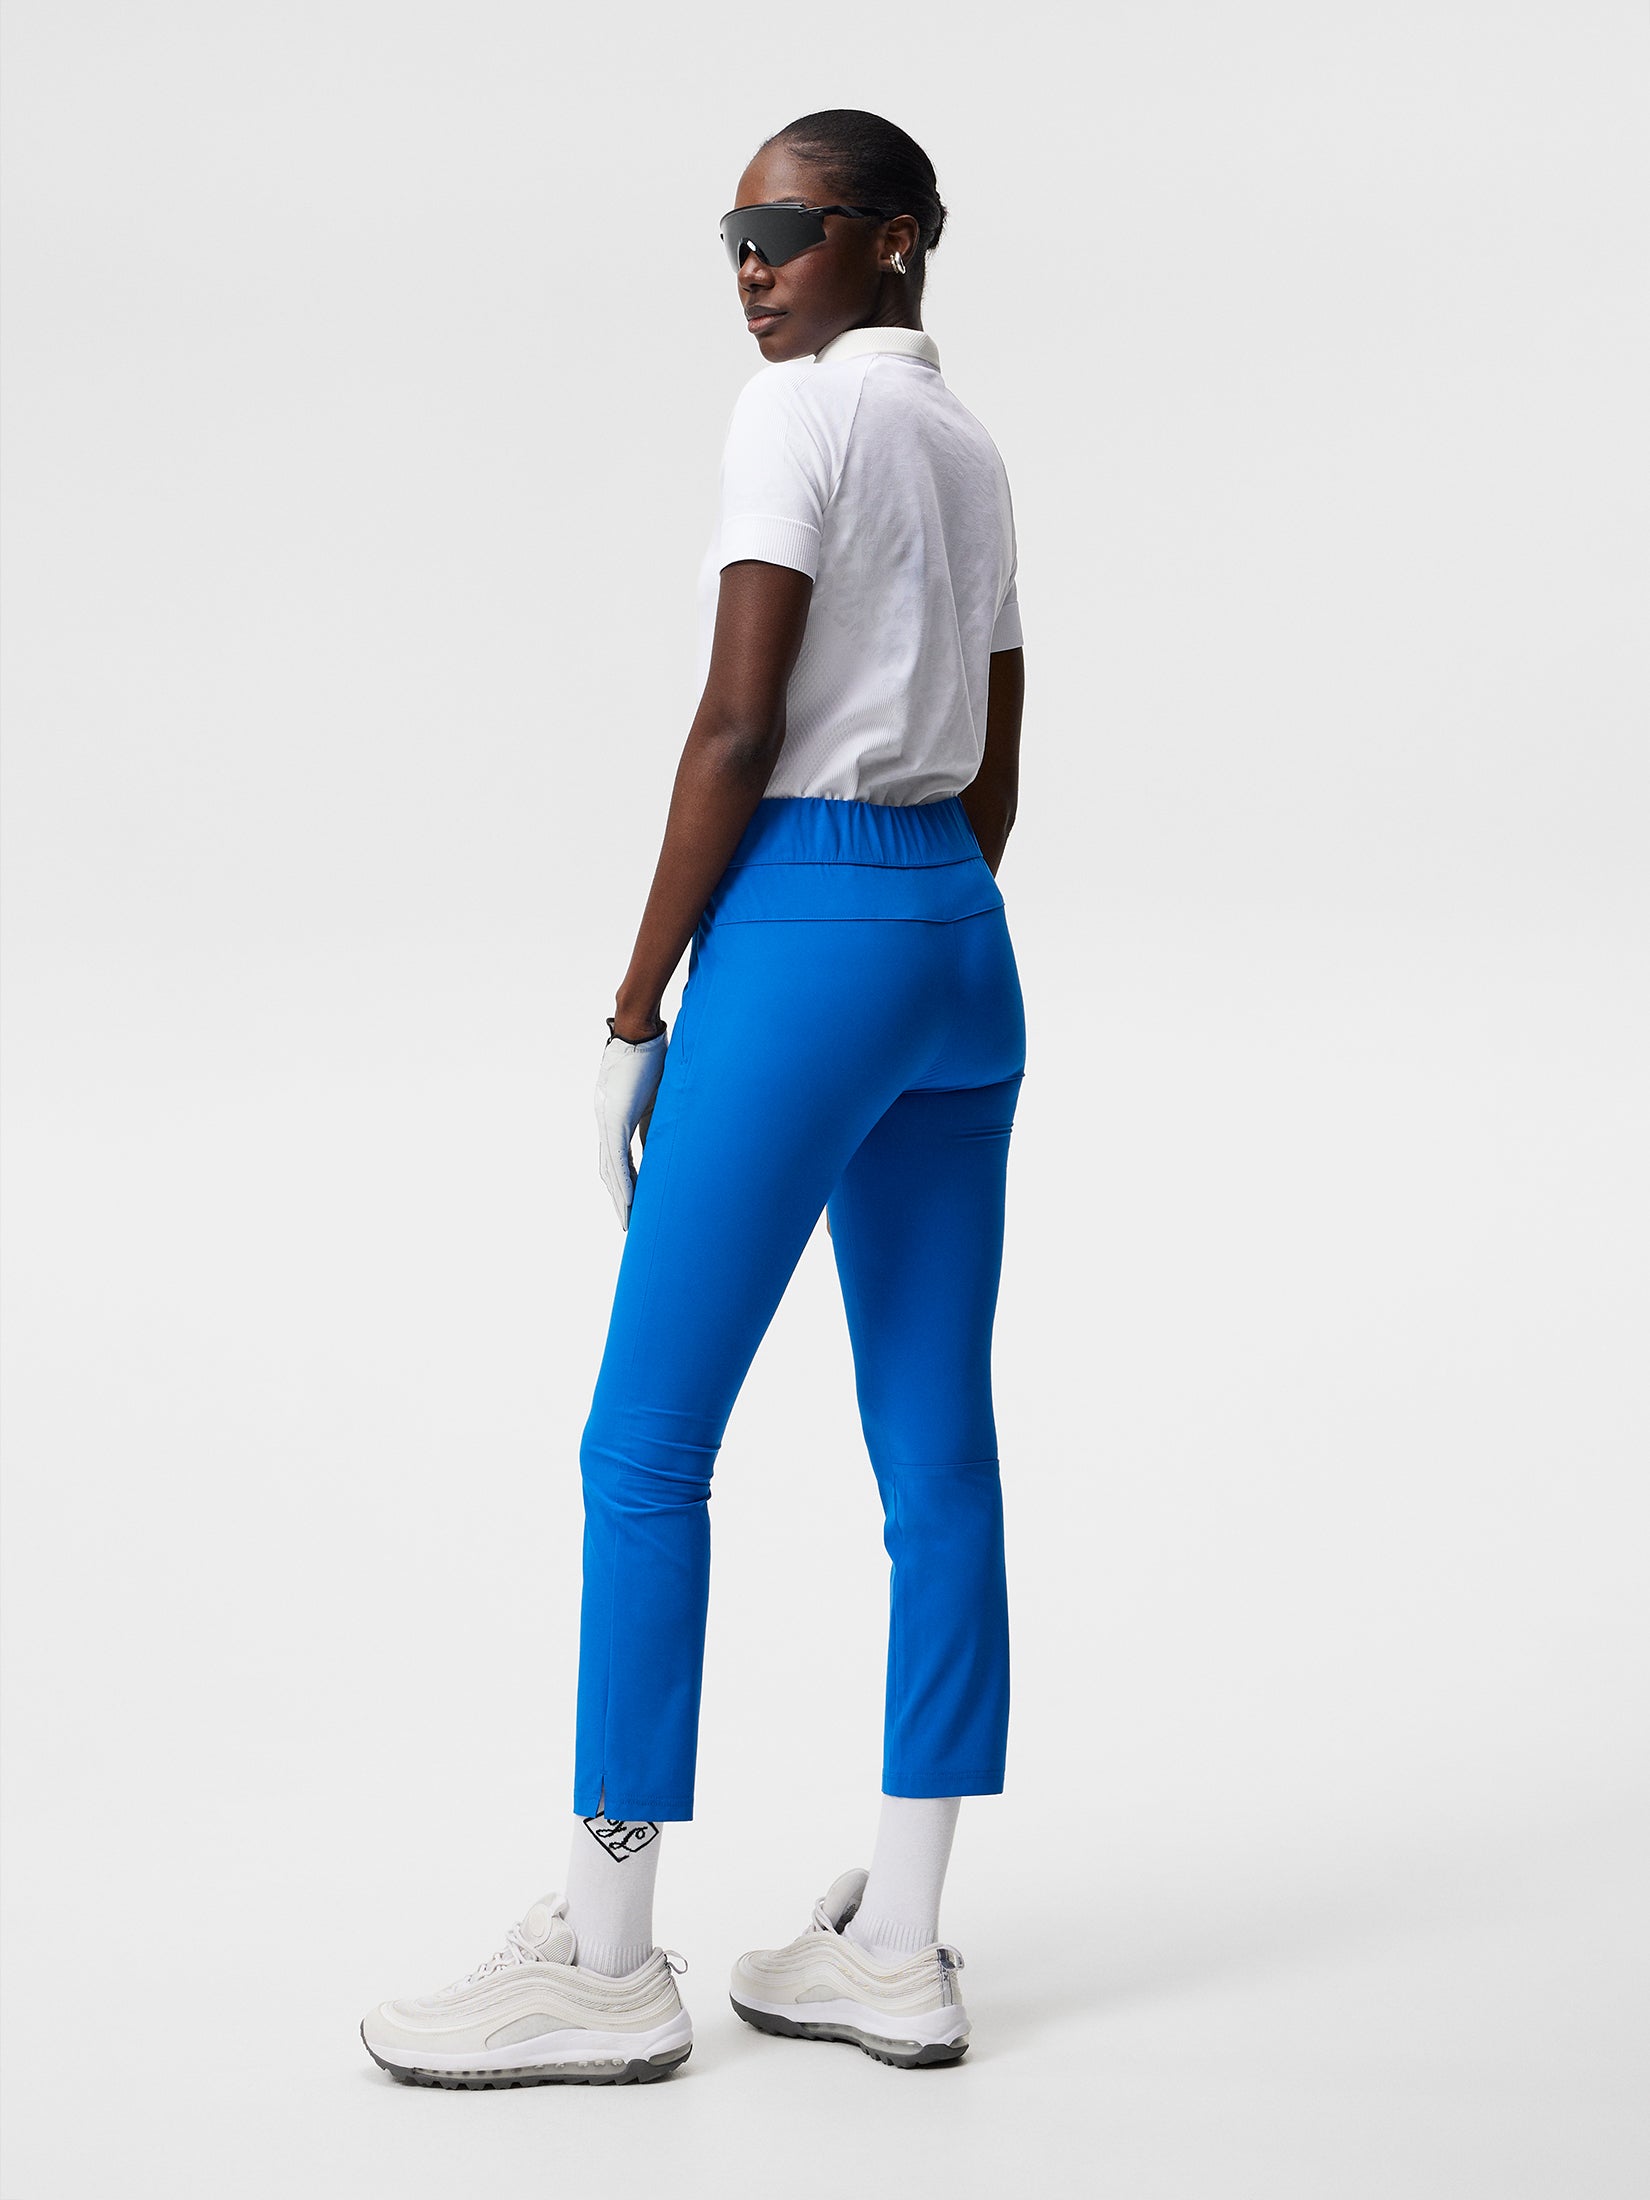 GOLFINO Ladies 4way stretch golf trousers with innovative side pocket  shop online  Golfino